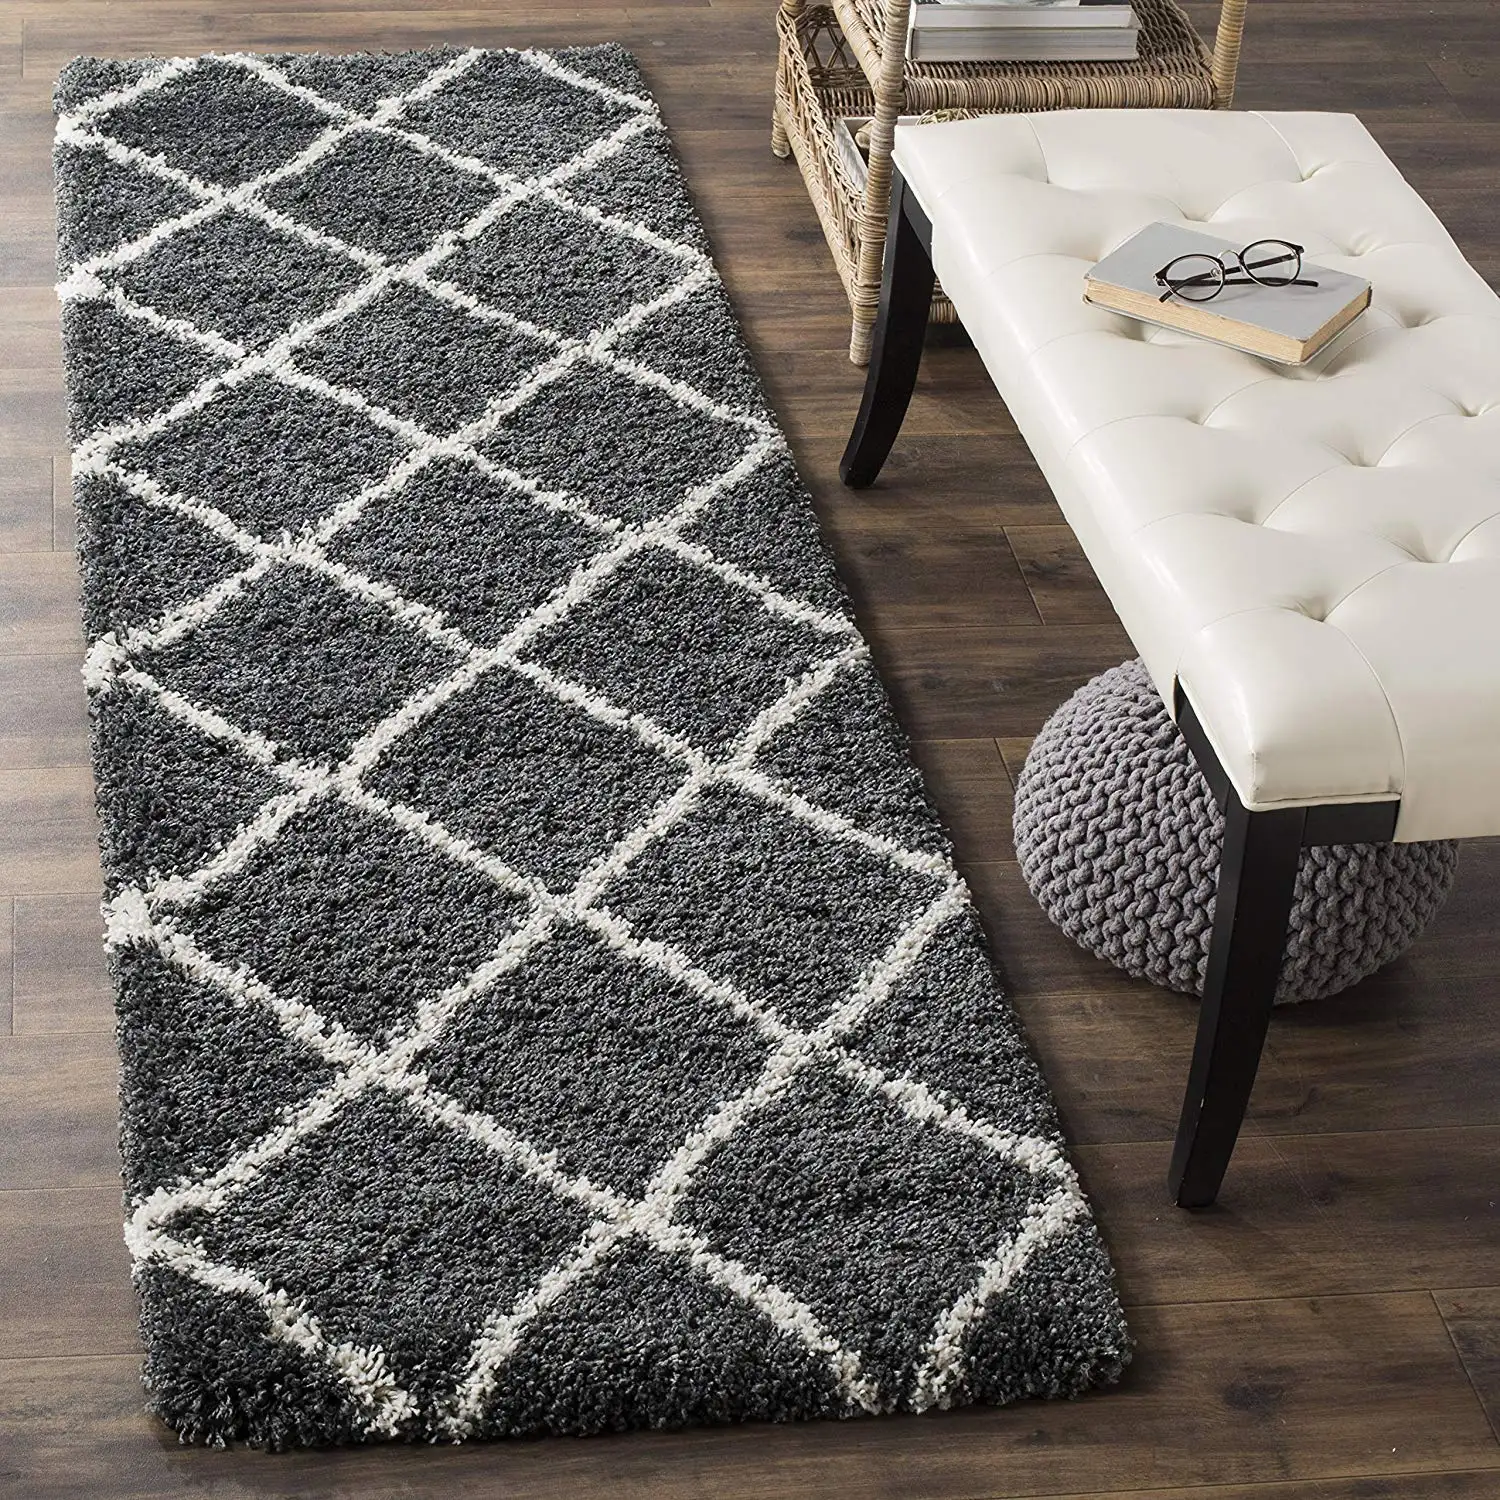 Best Selling Amazon Carpet I Beautiful Indian Grey Shaggy Carpet